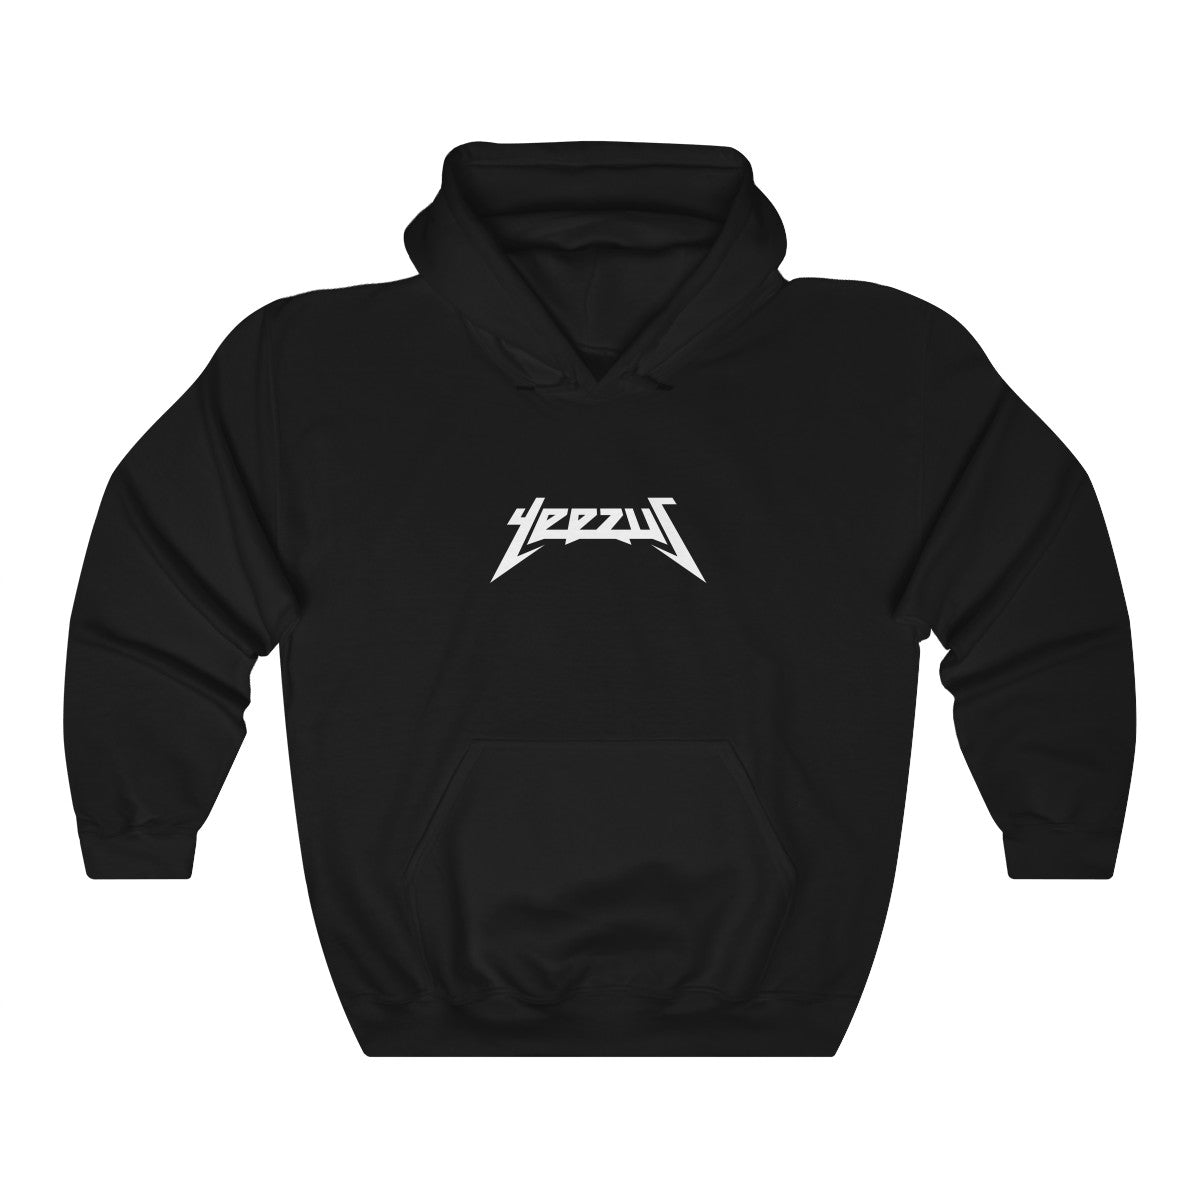 Yeezus Unisex Heavy Blend Hooded Sweatshirt-Black-L-Archethype